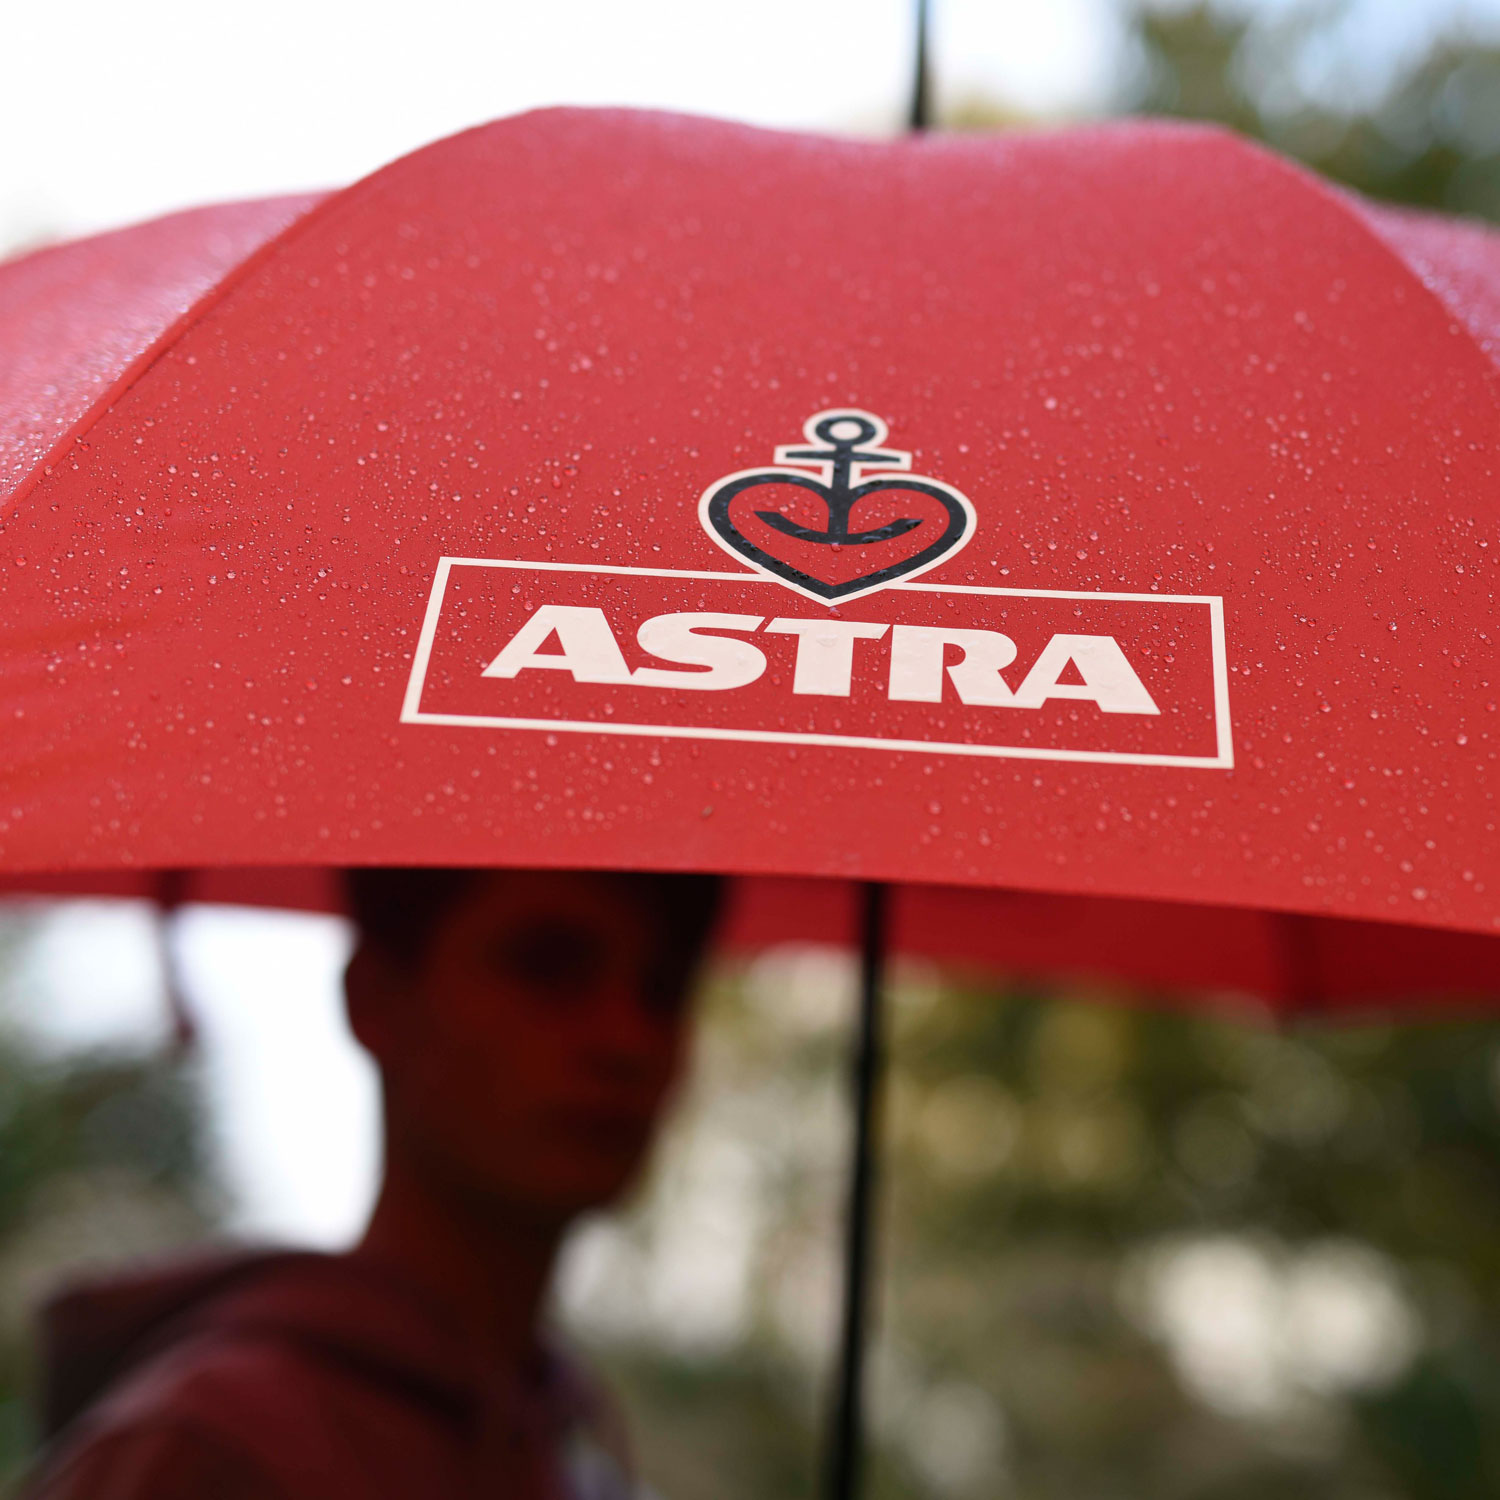 Astra-Regenschirm „Ich bin trocken“